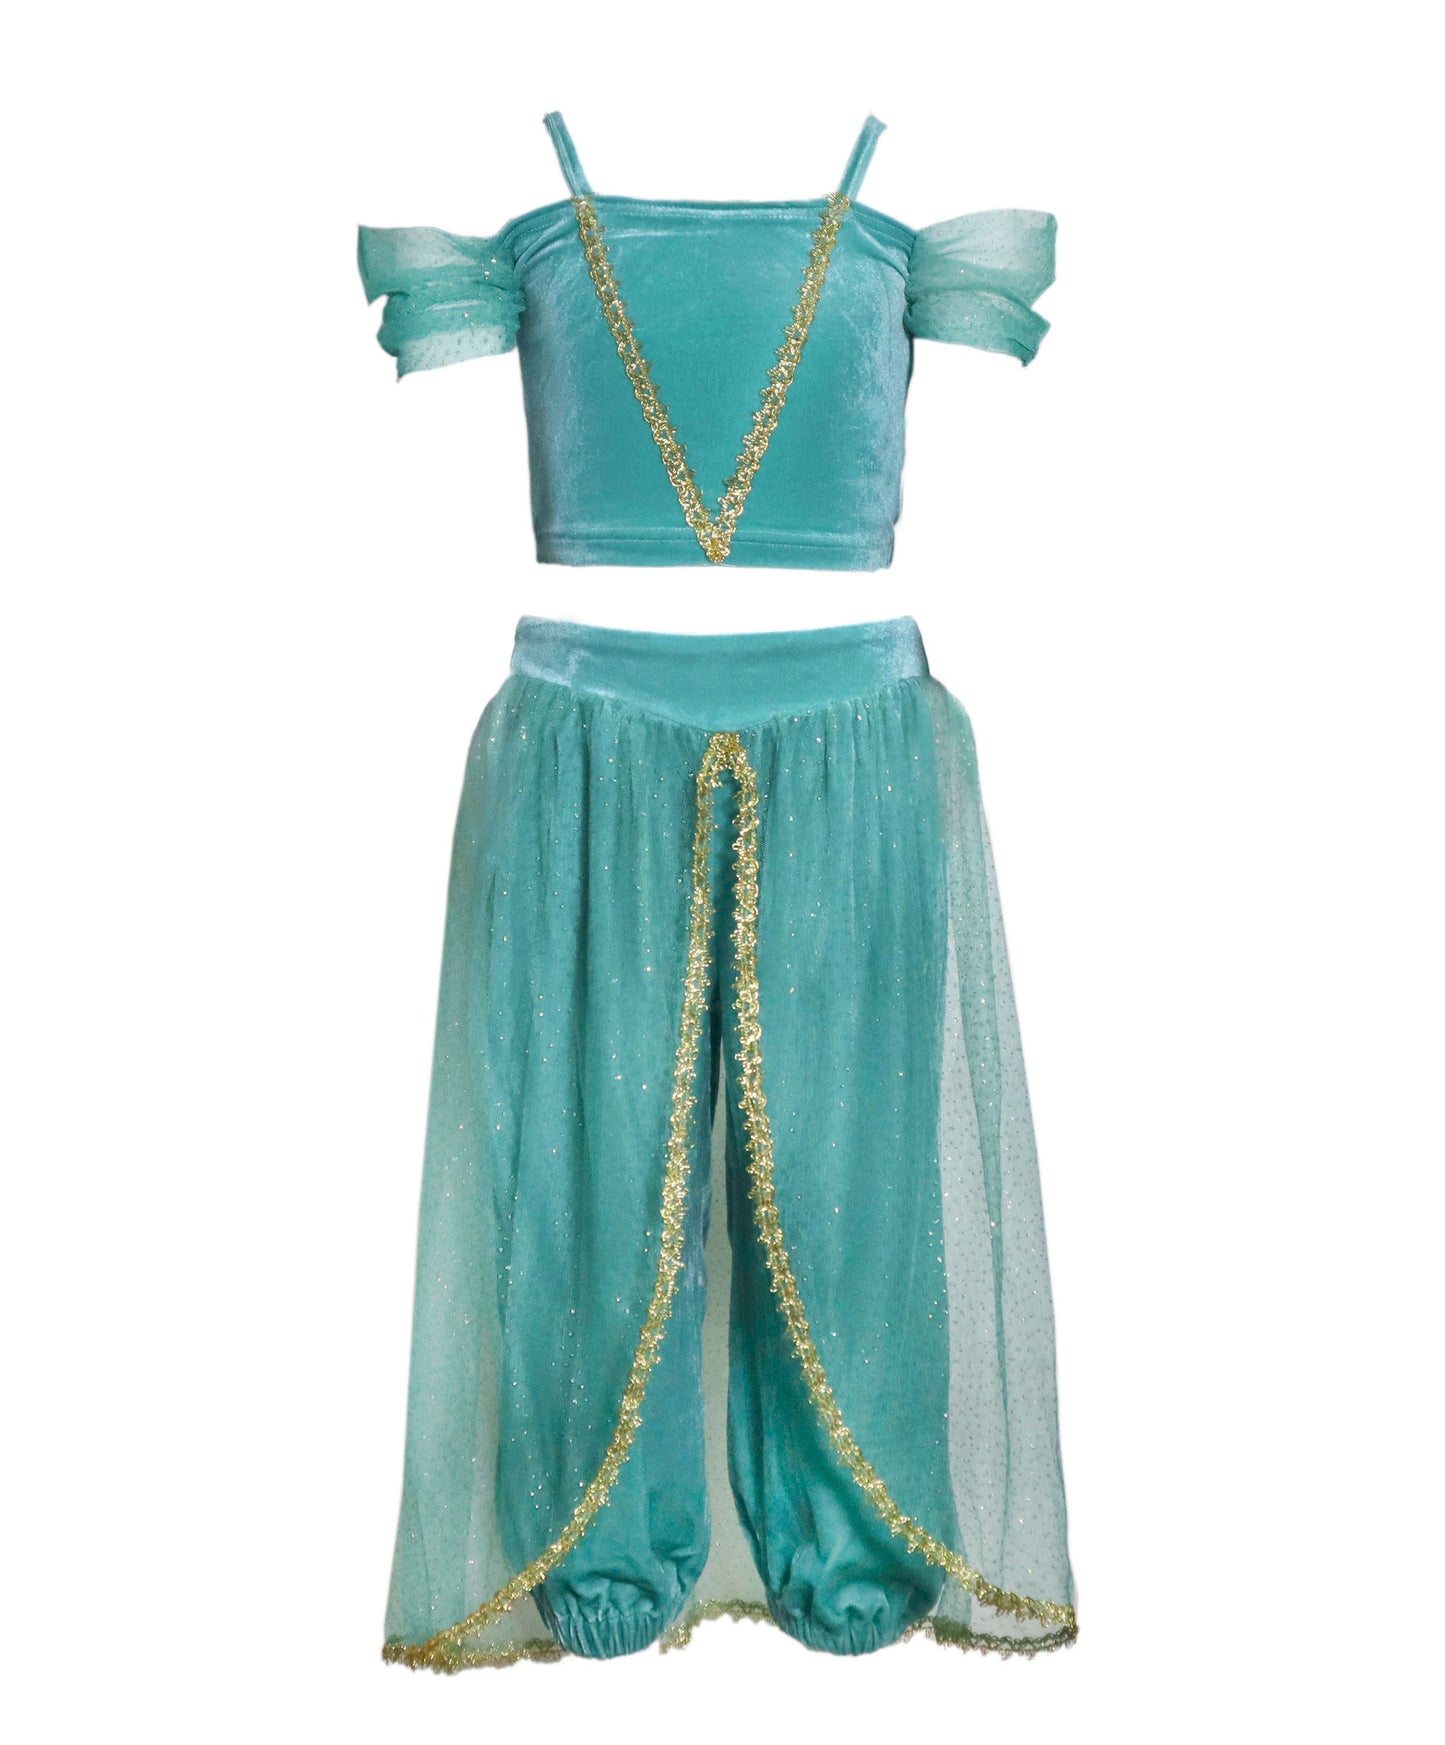 Joy - Arabian Princess Costume